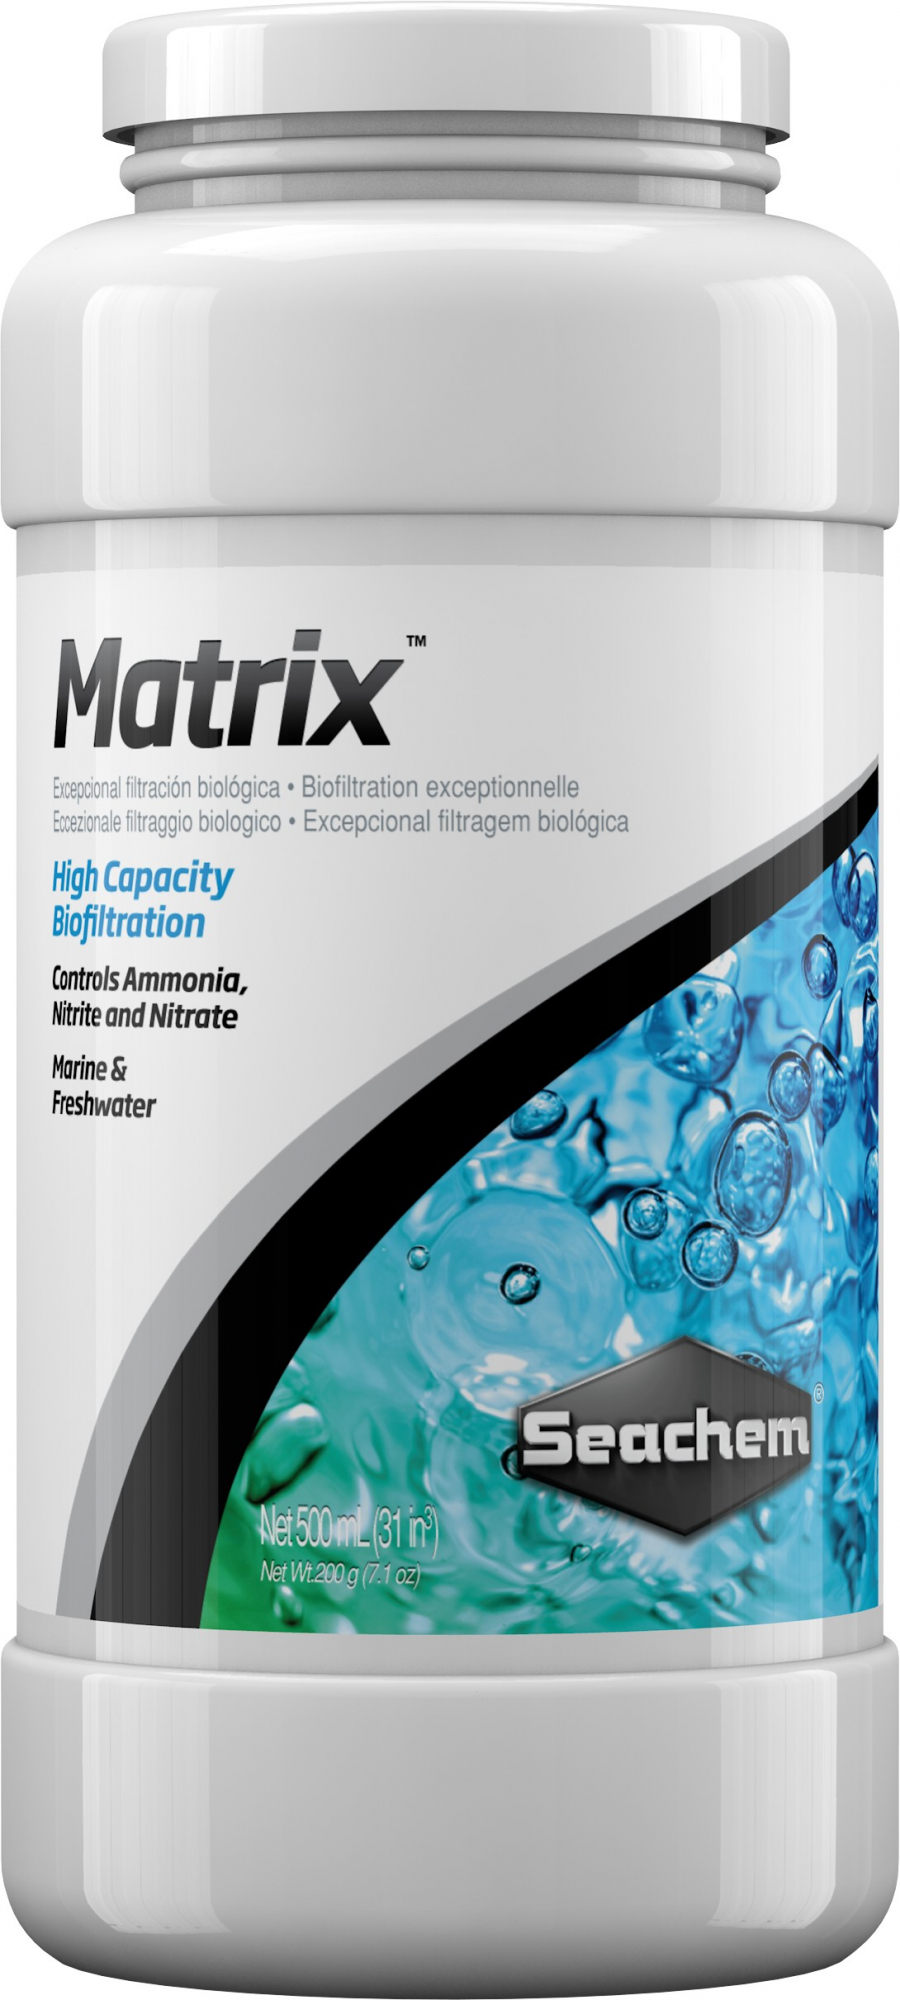 Seachem Matrix Material filtrante biológico